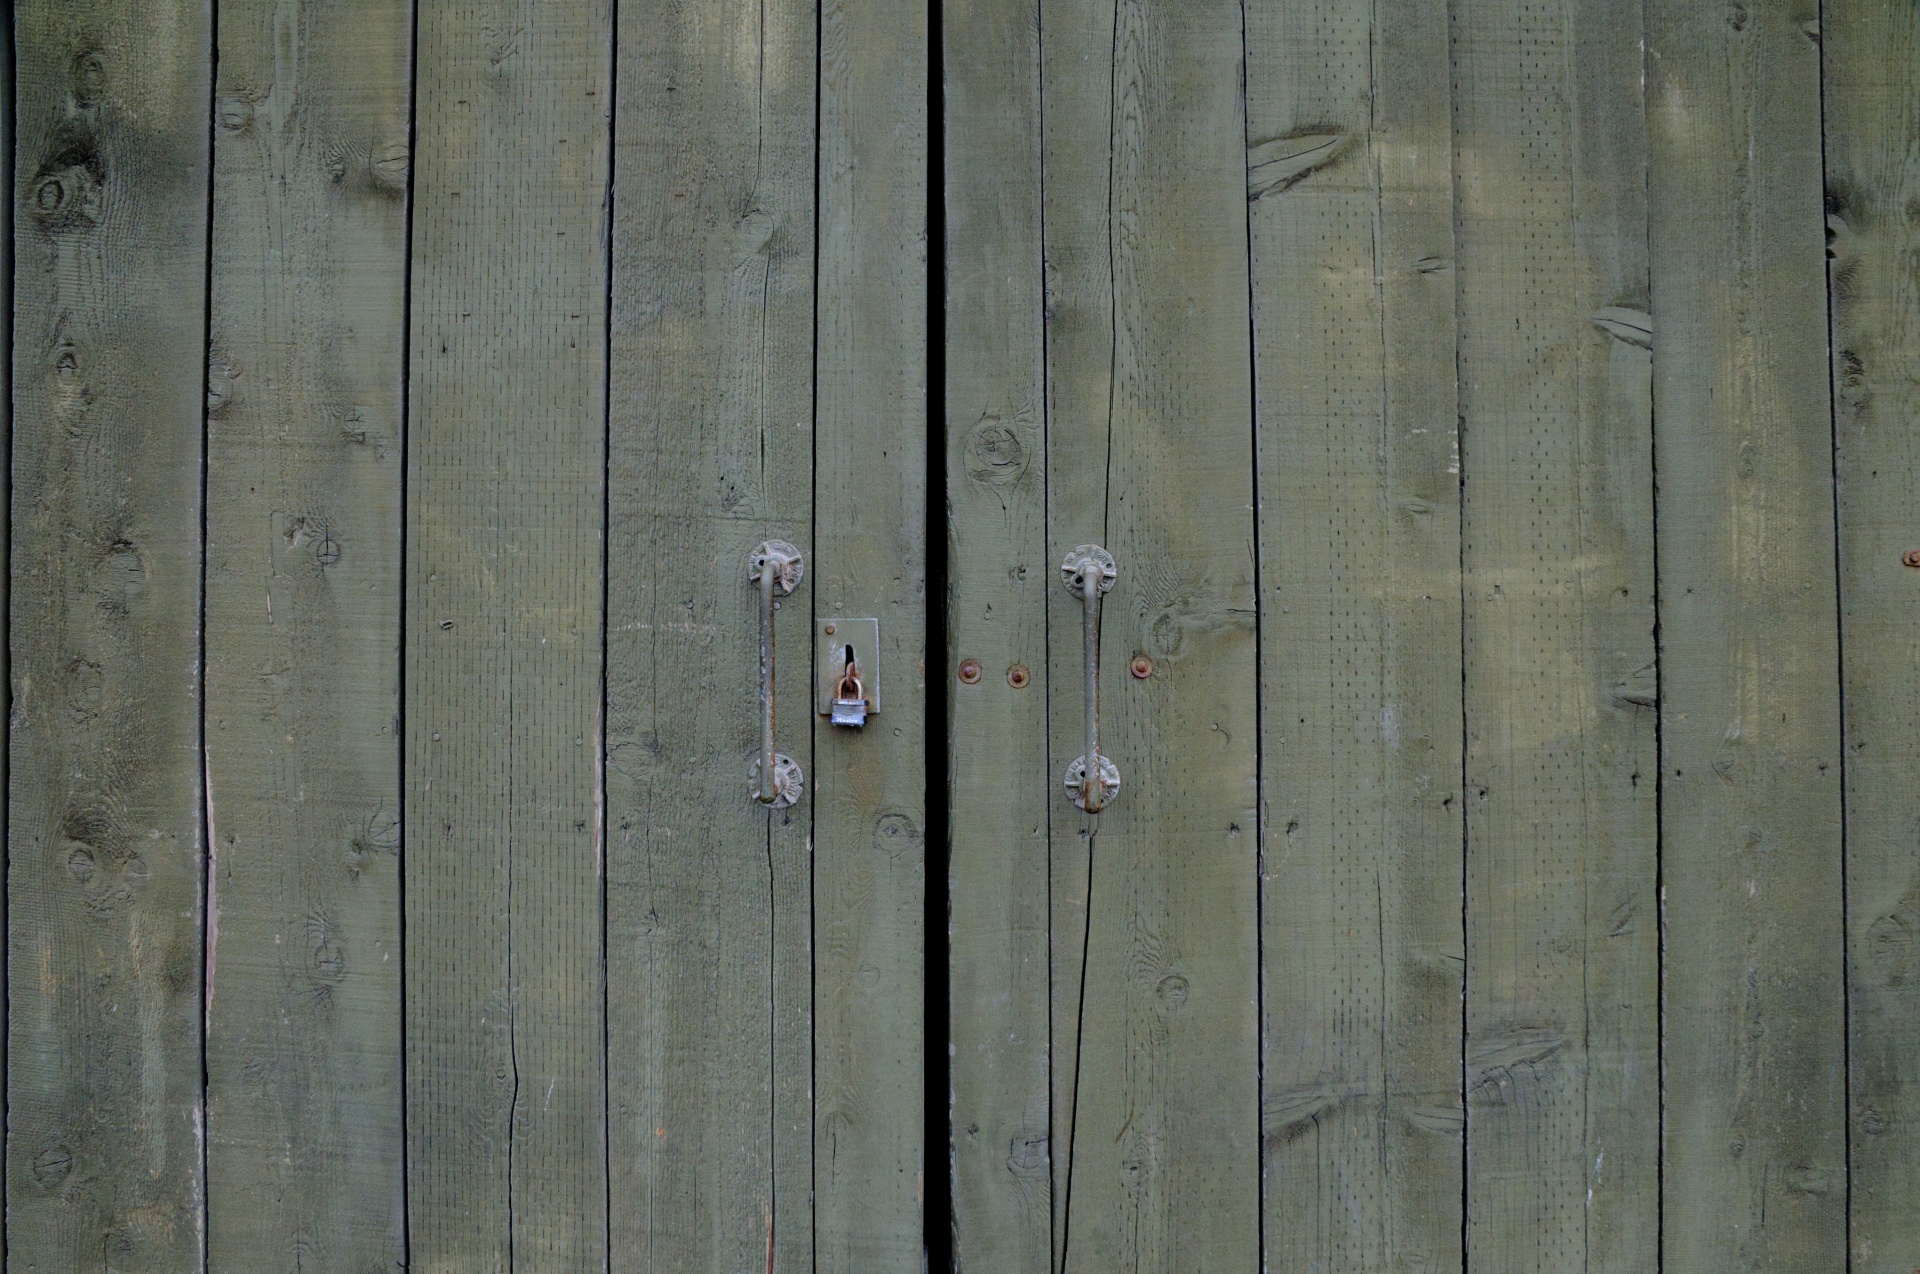 Grunge木面板门背景